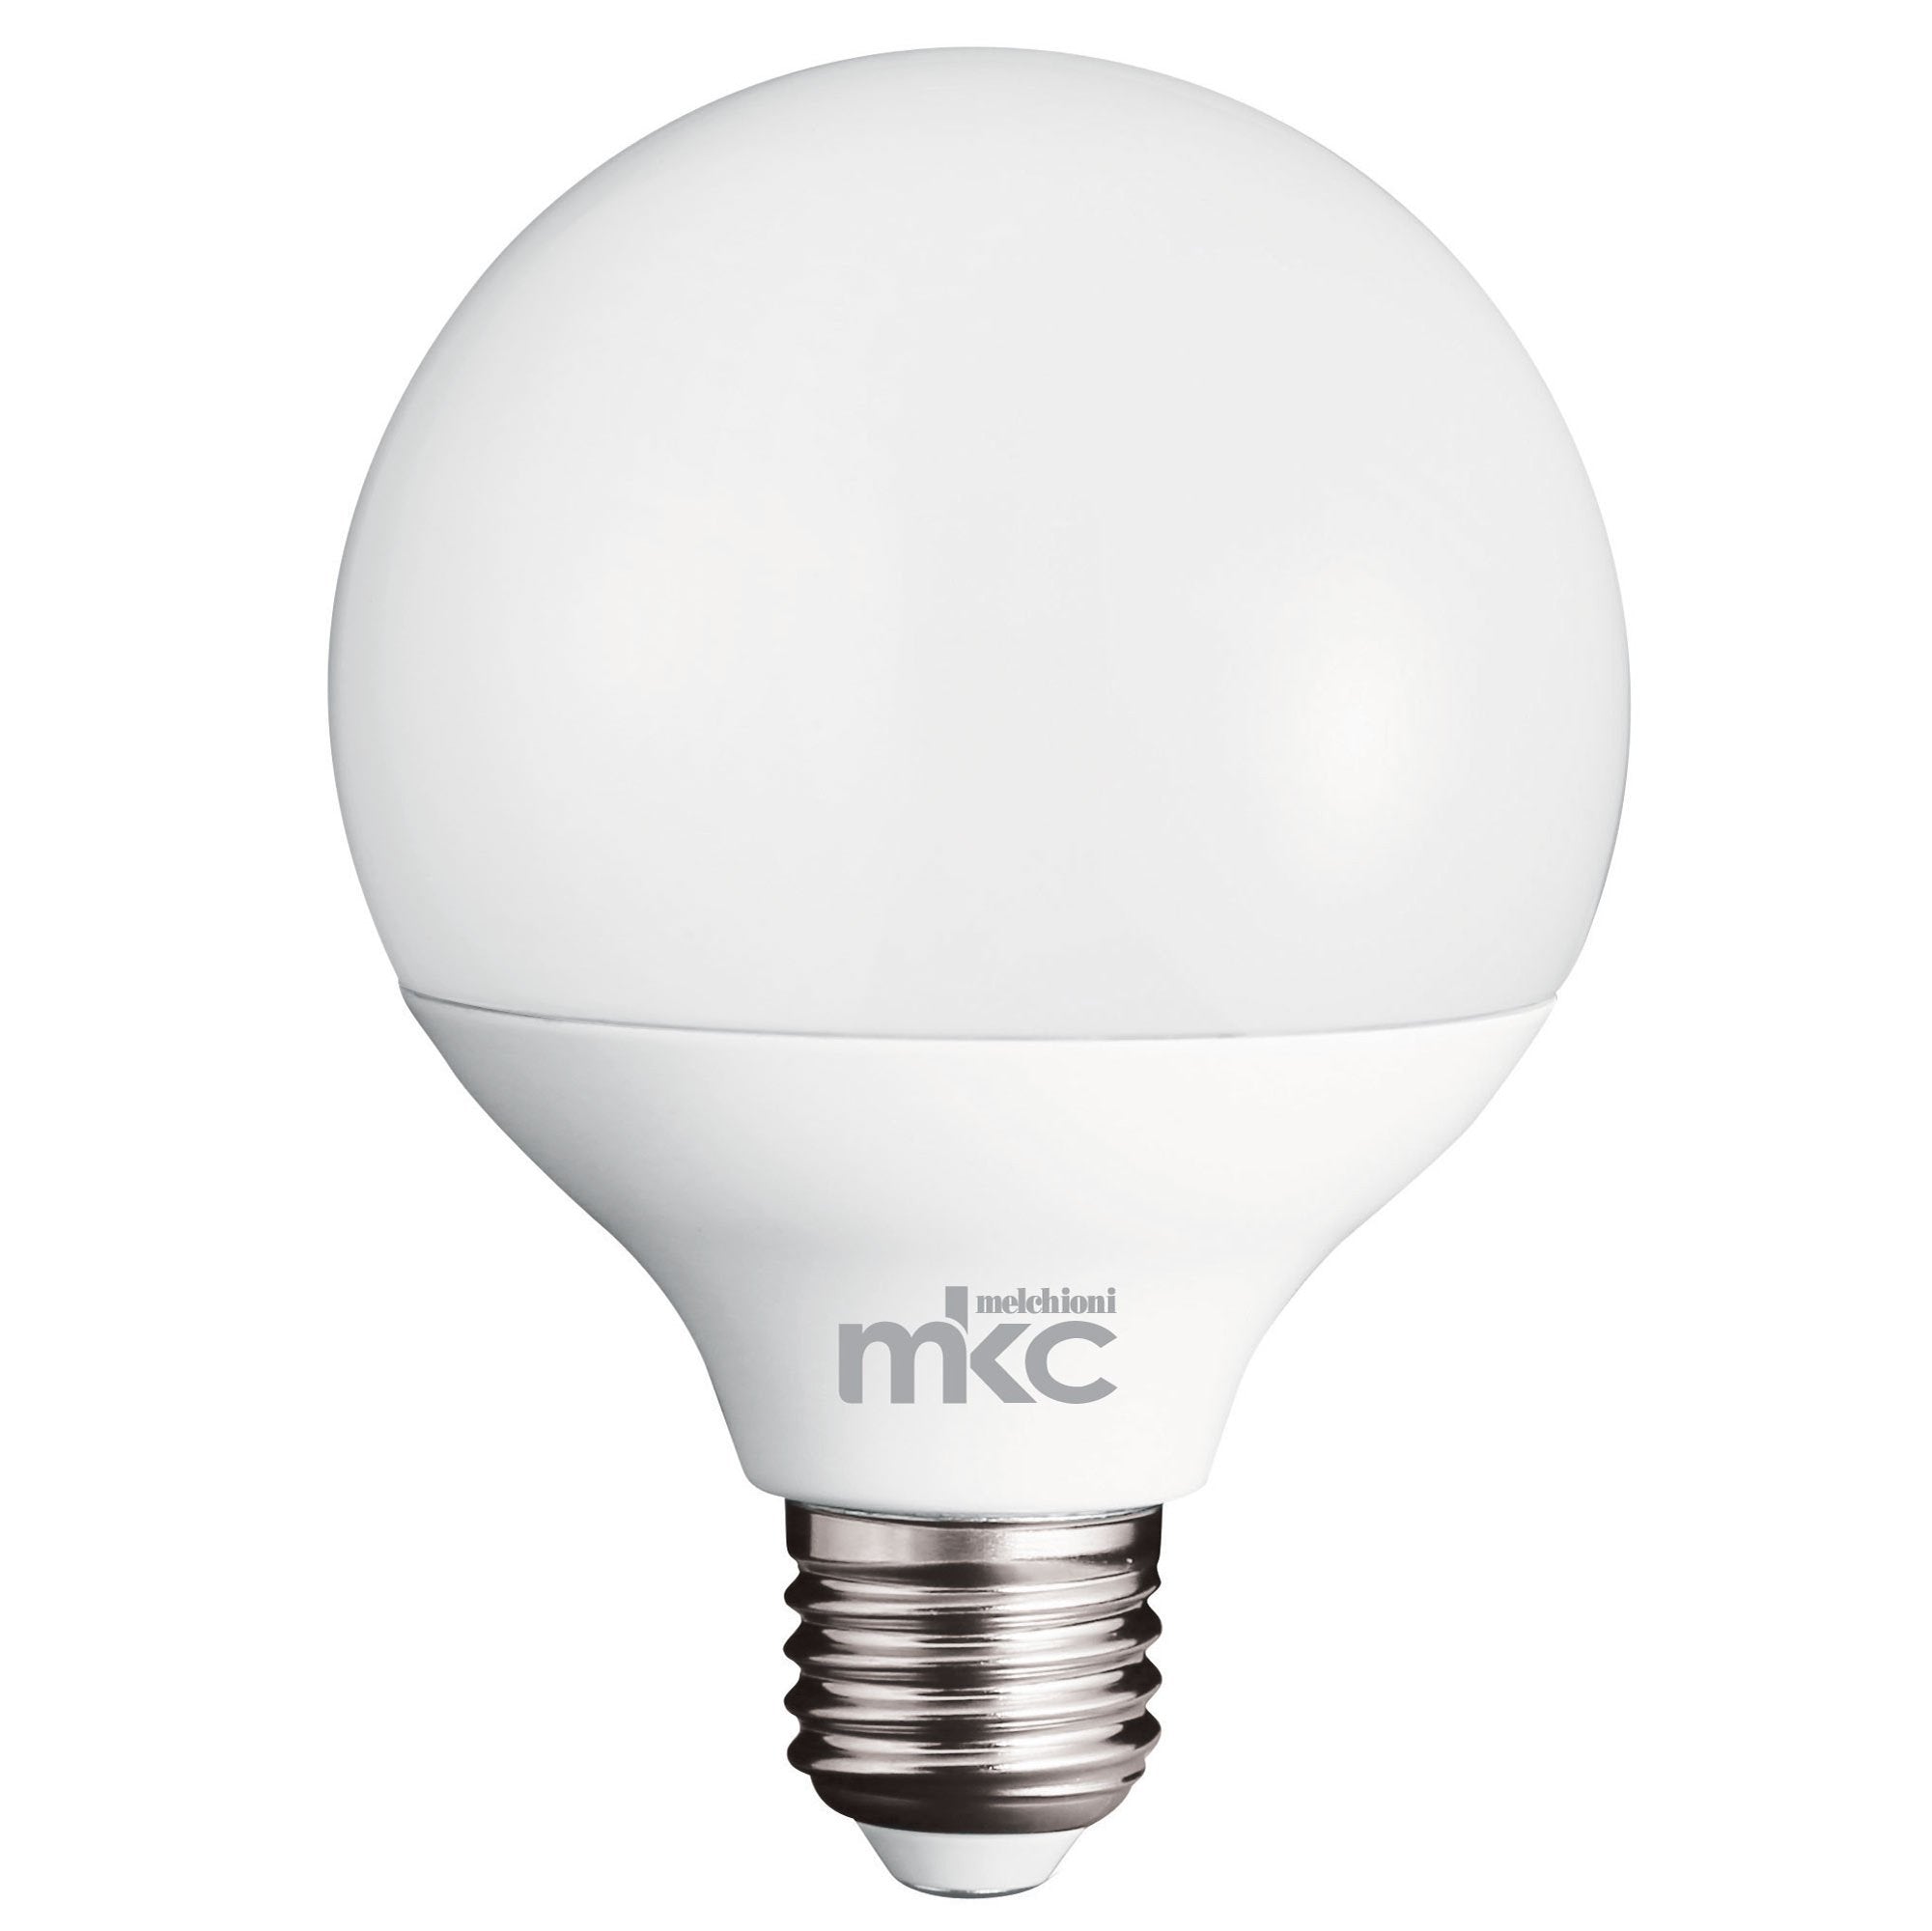 mkc-lampada-led-globo-a90-14w-e27-4000k-luce-bianca-naturale